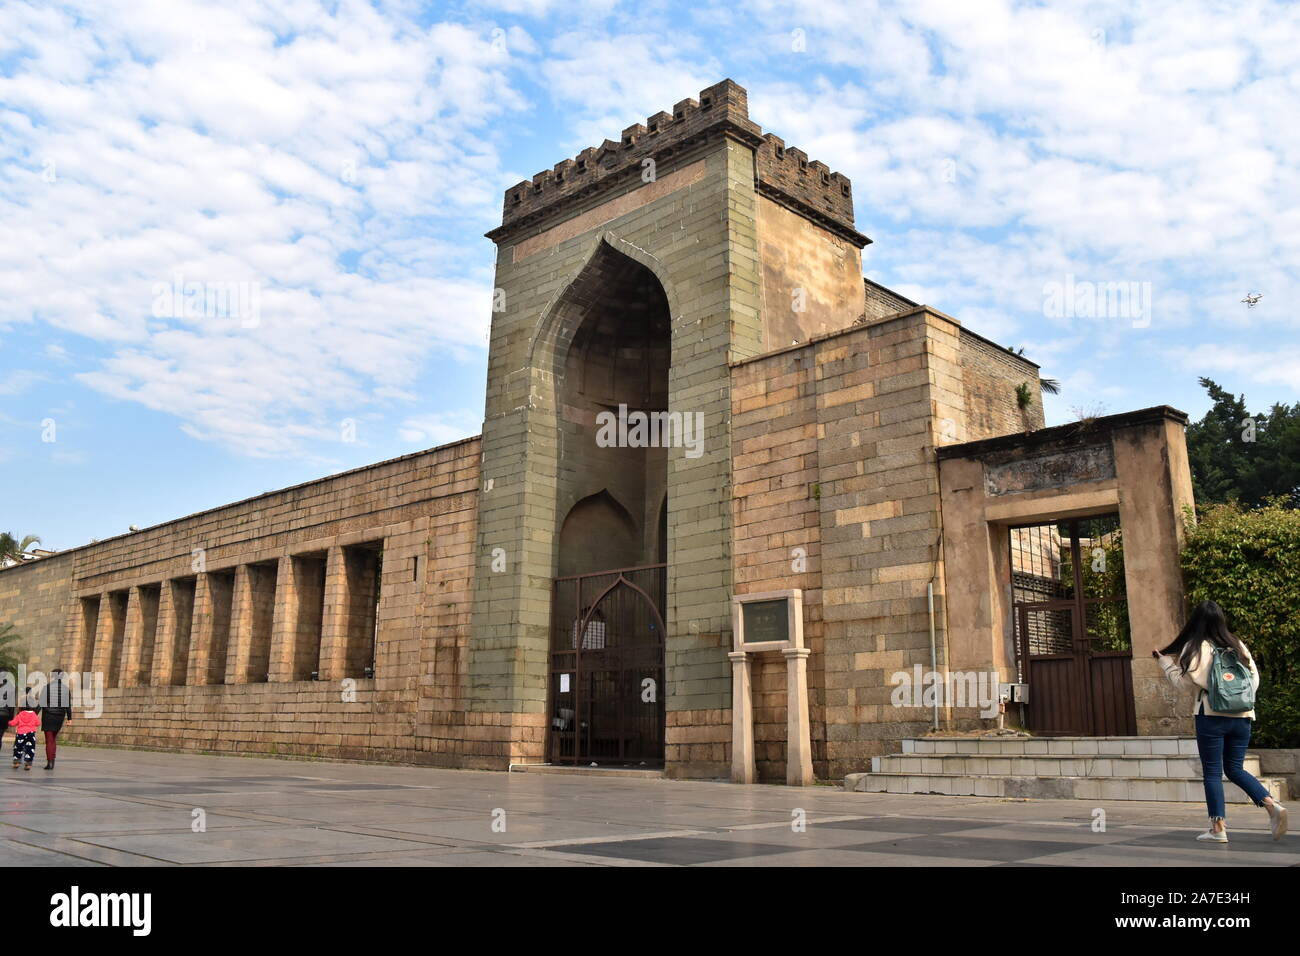 L Islam in Cina - Qingjing antica moschea Ashab delle prime comunità musulmana di Quanzhou, Fujian, Cina Foto Stock